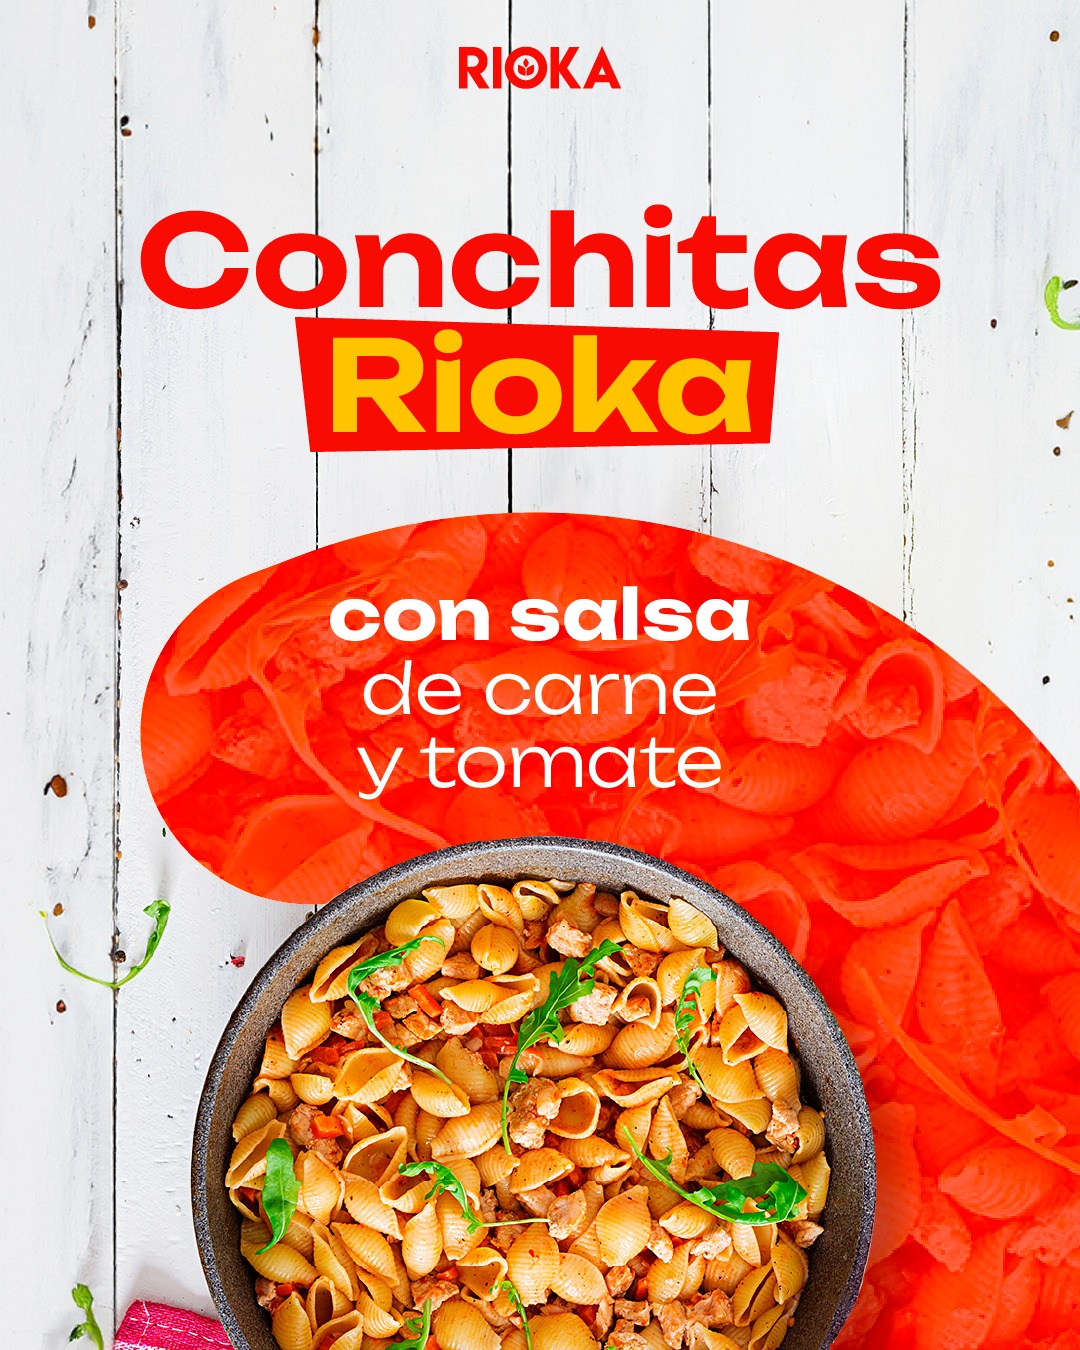 Conchitas Rioka con salsa de carne y tomate